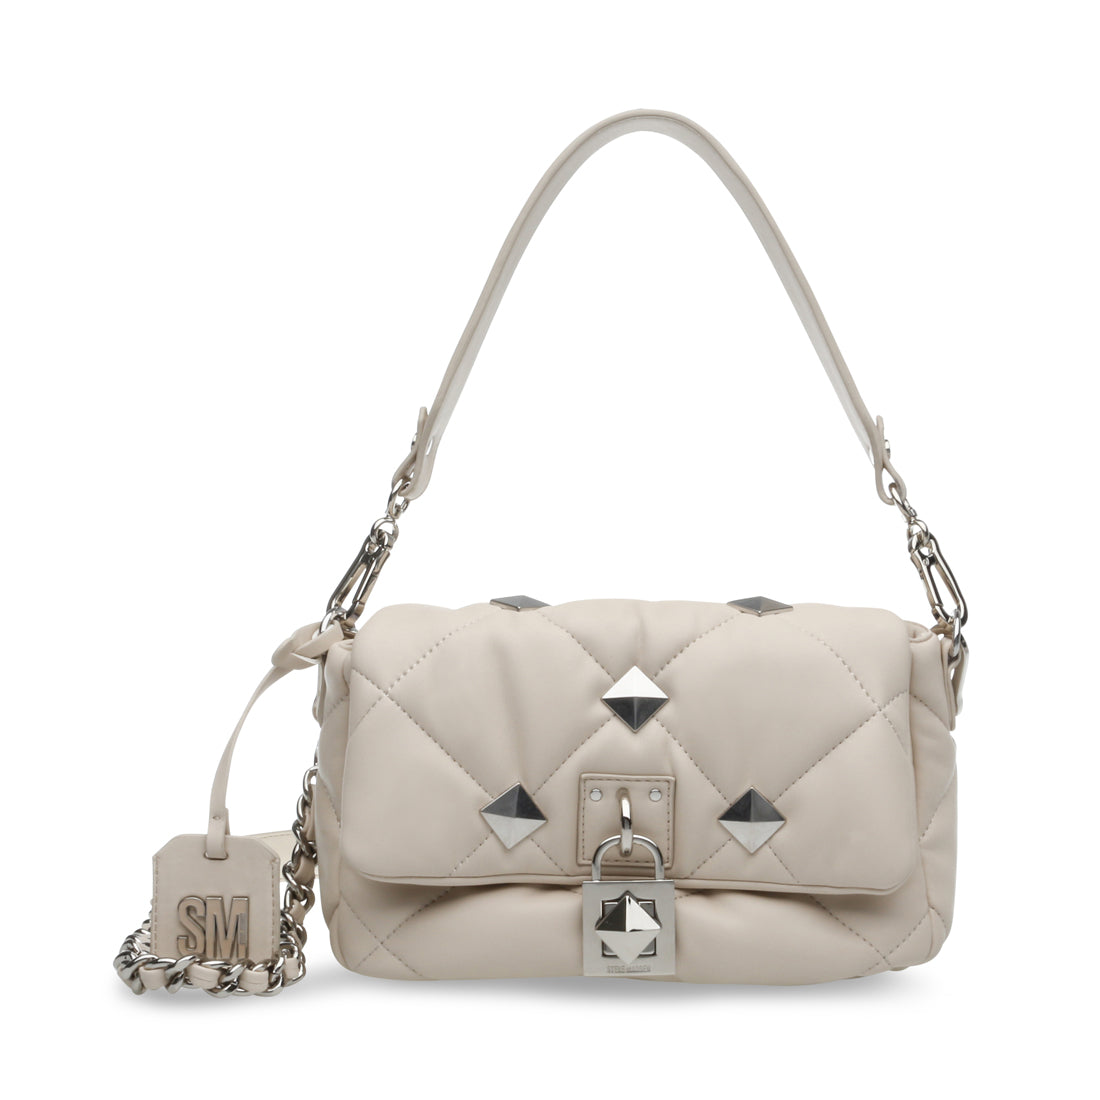 Handbags & Purses on Clearance Steve Madden Handbags & Purses Sale